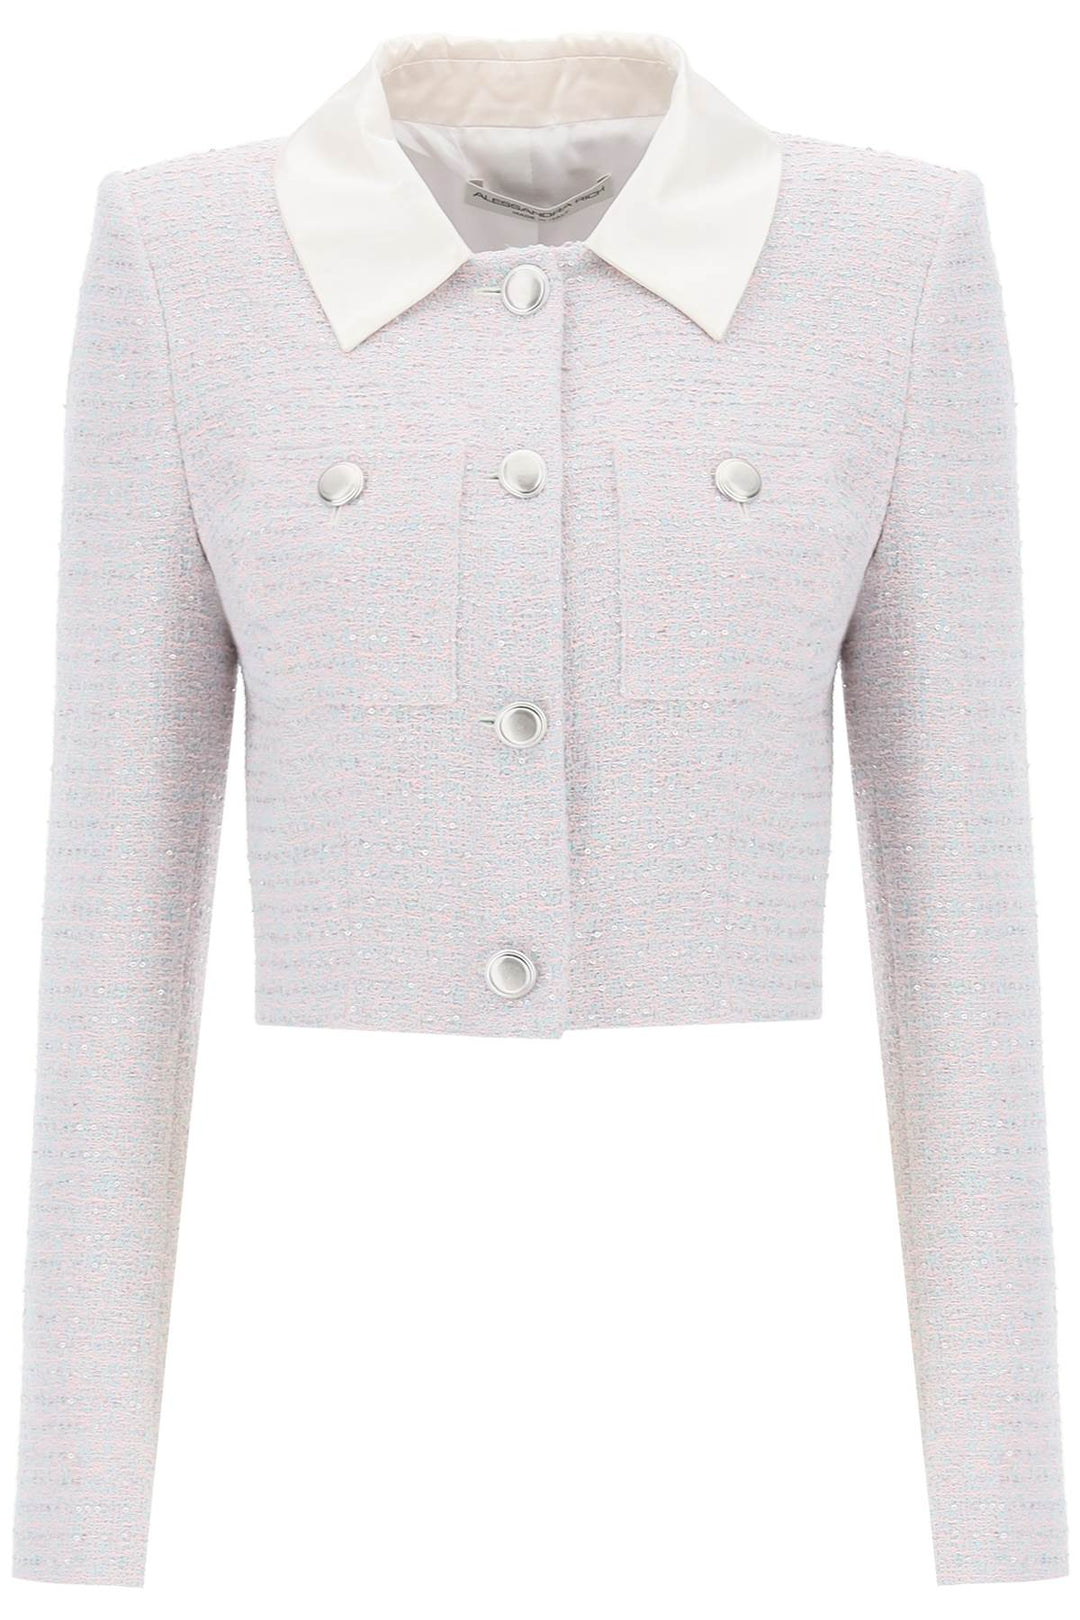 Alessandra Rich Cropped Jacket In Tweed Boucle'   Celeste